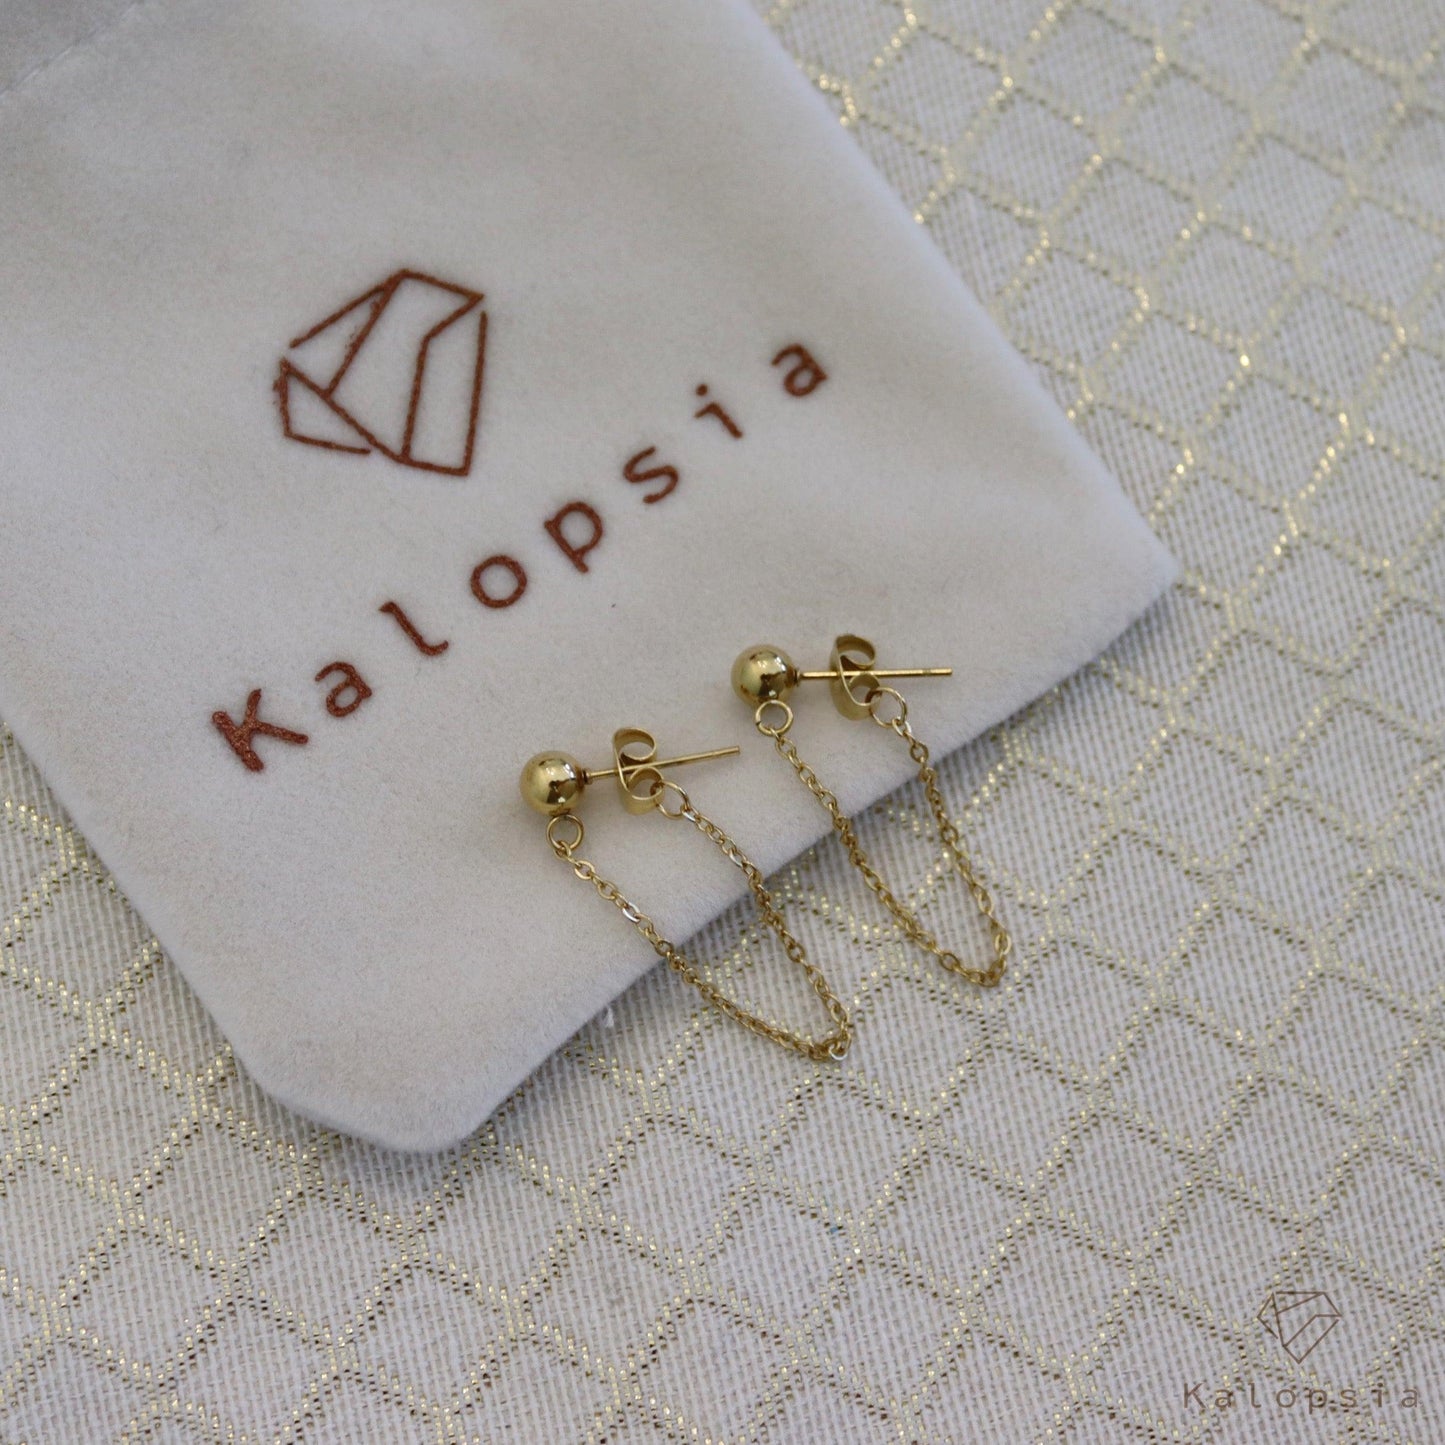 Chain Sphere Earring - Kalopsia Accessories